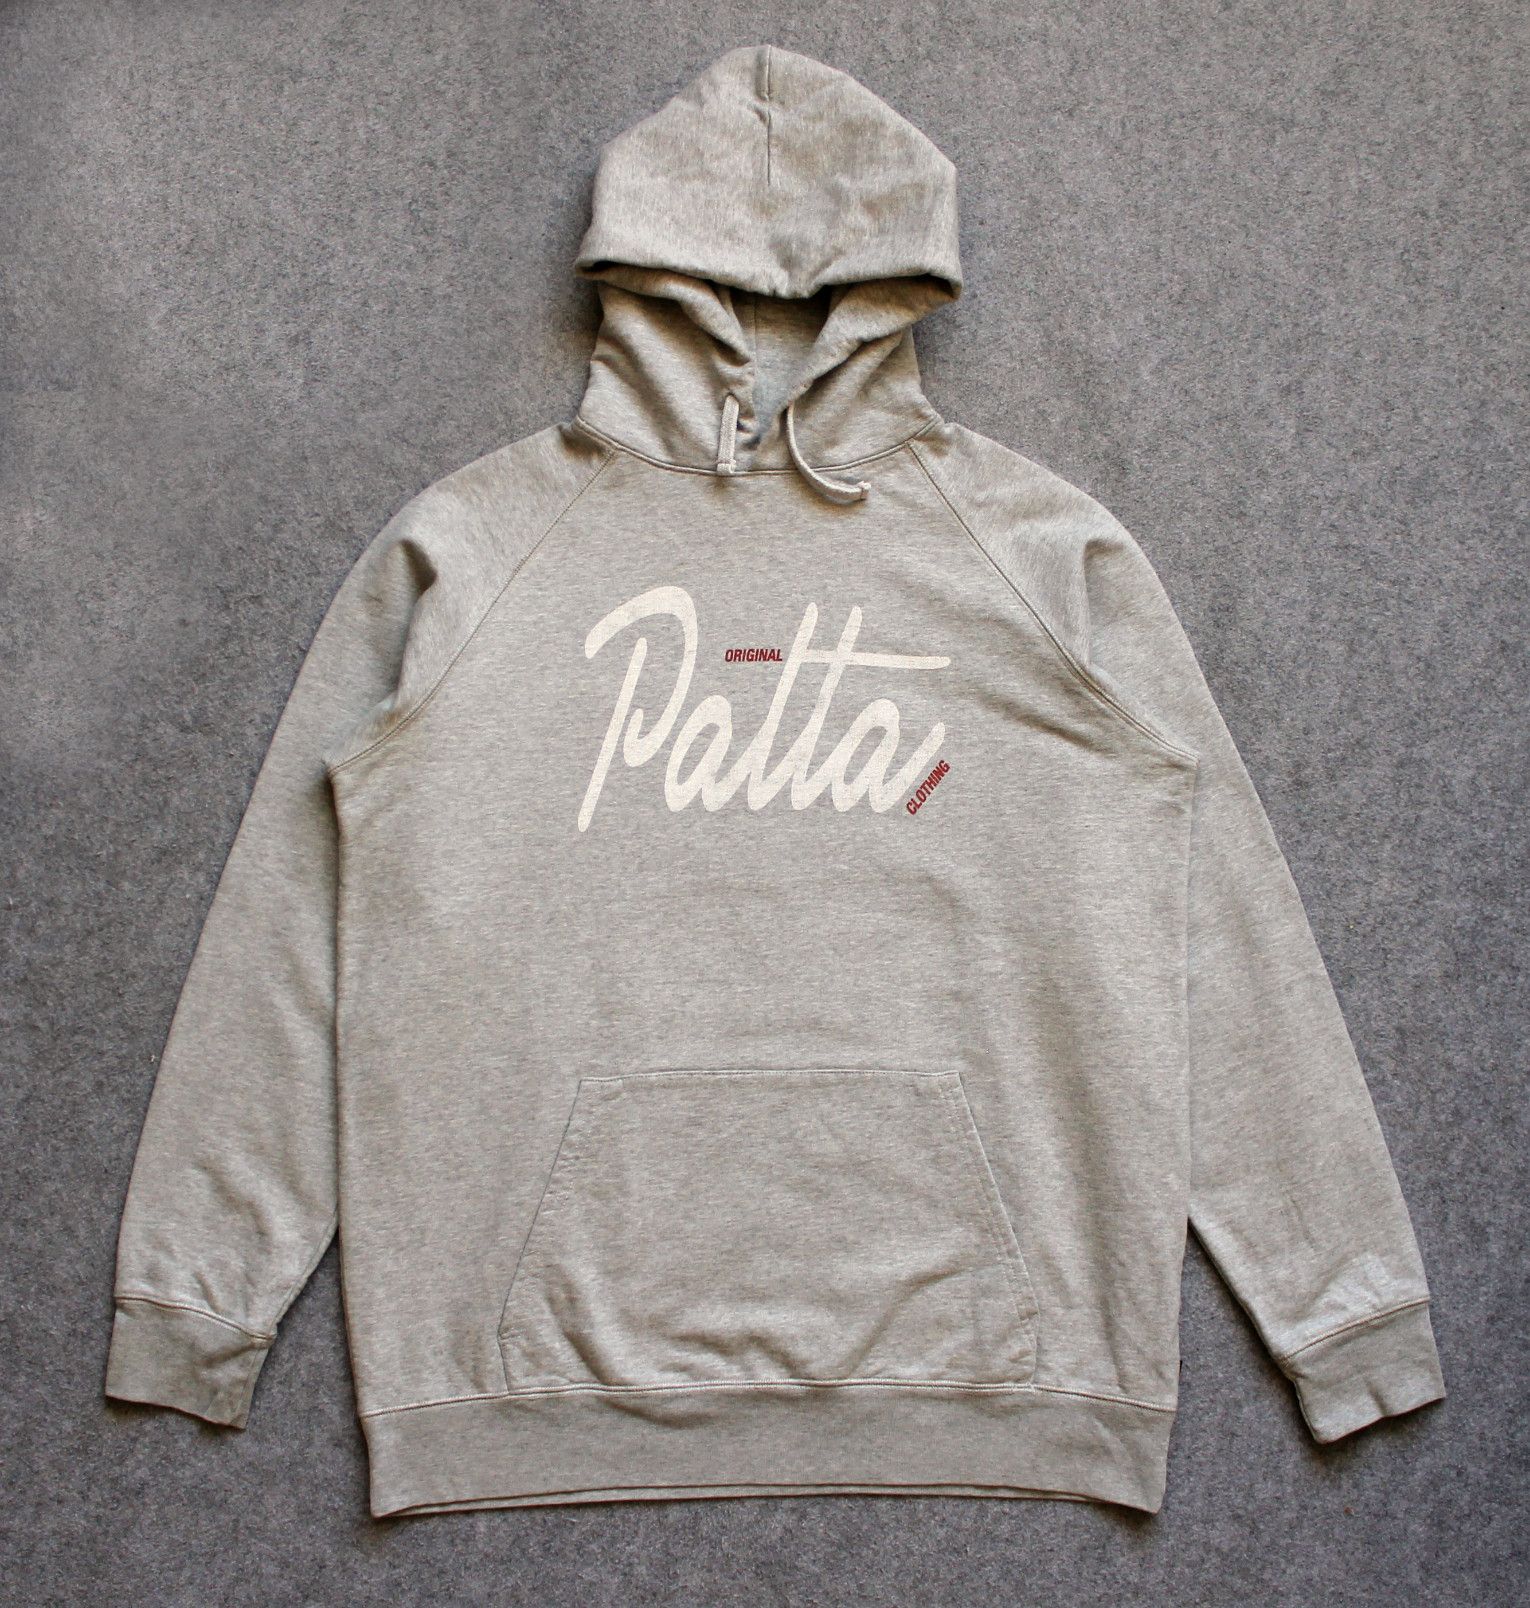 Patta Patta hoodie Size US XXL / EU 58 / 5 - 2 Preview